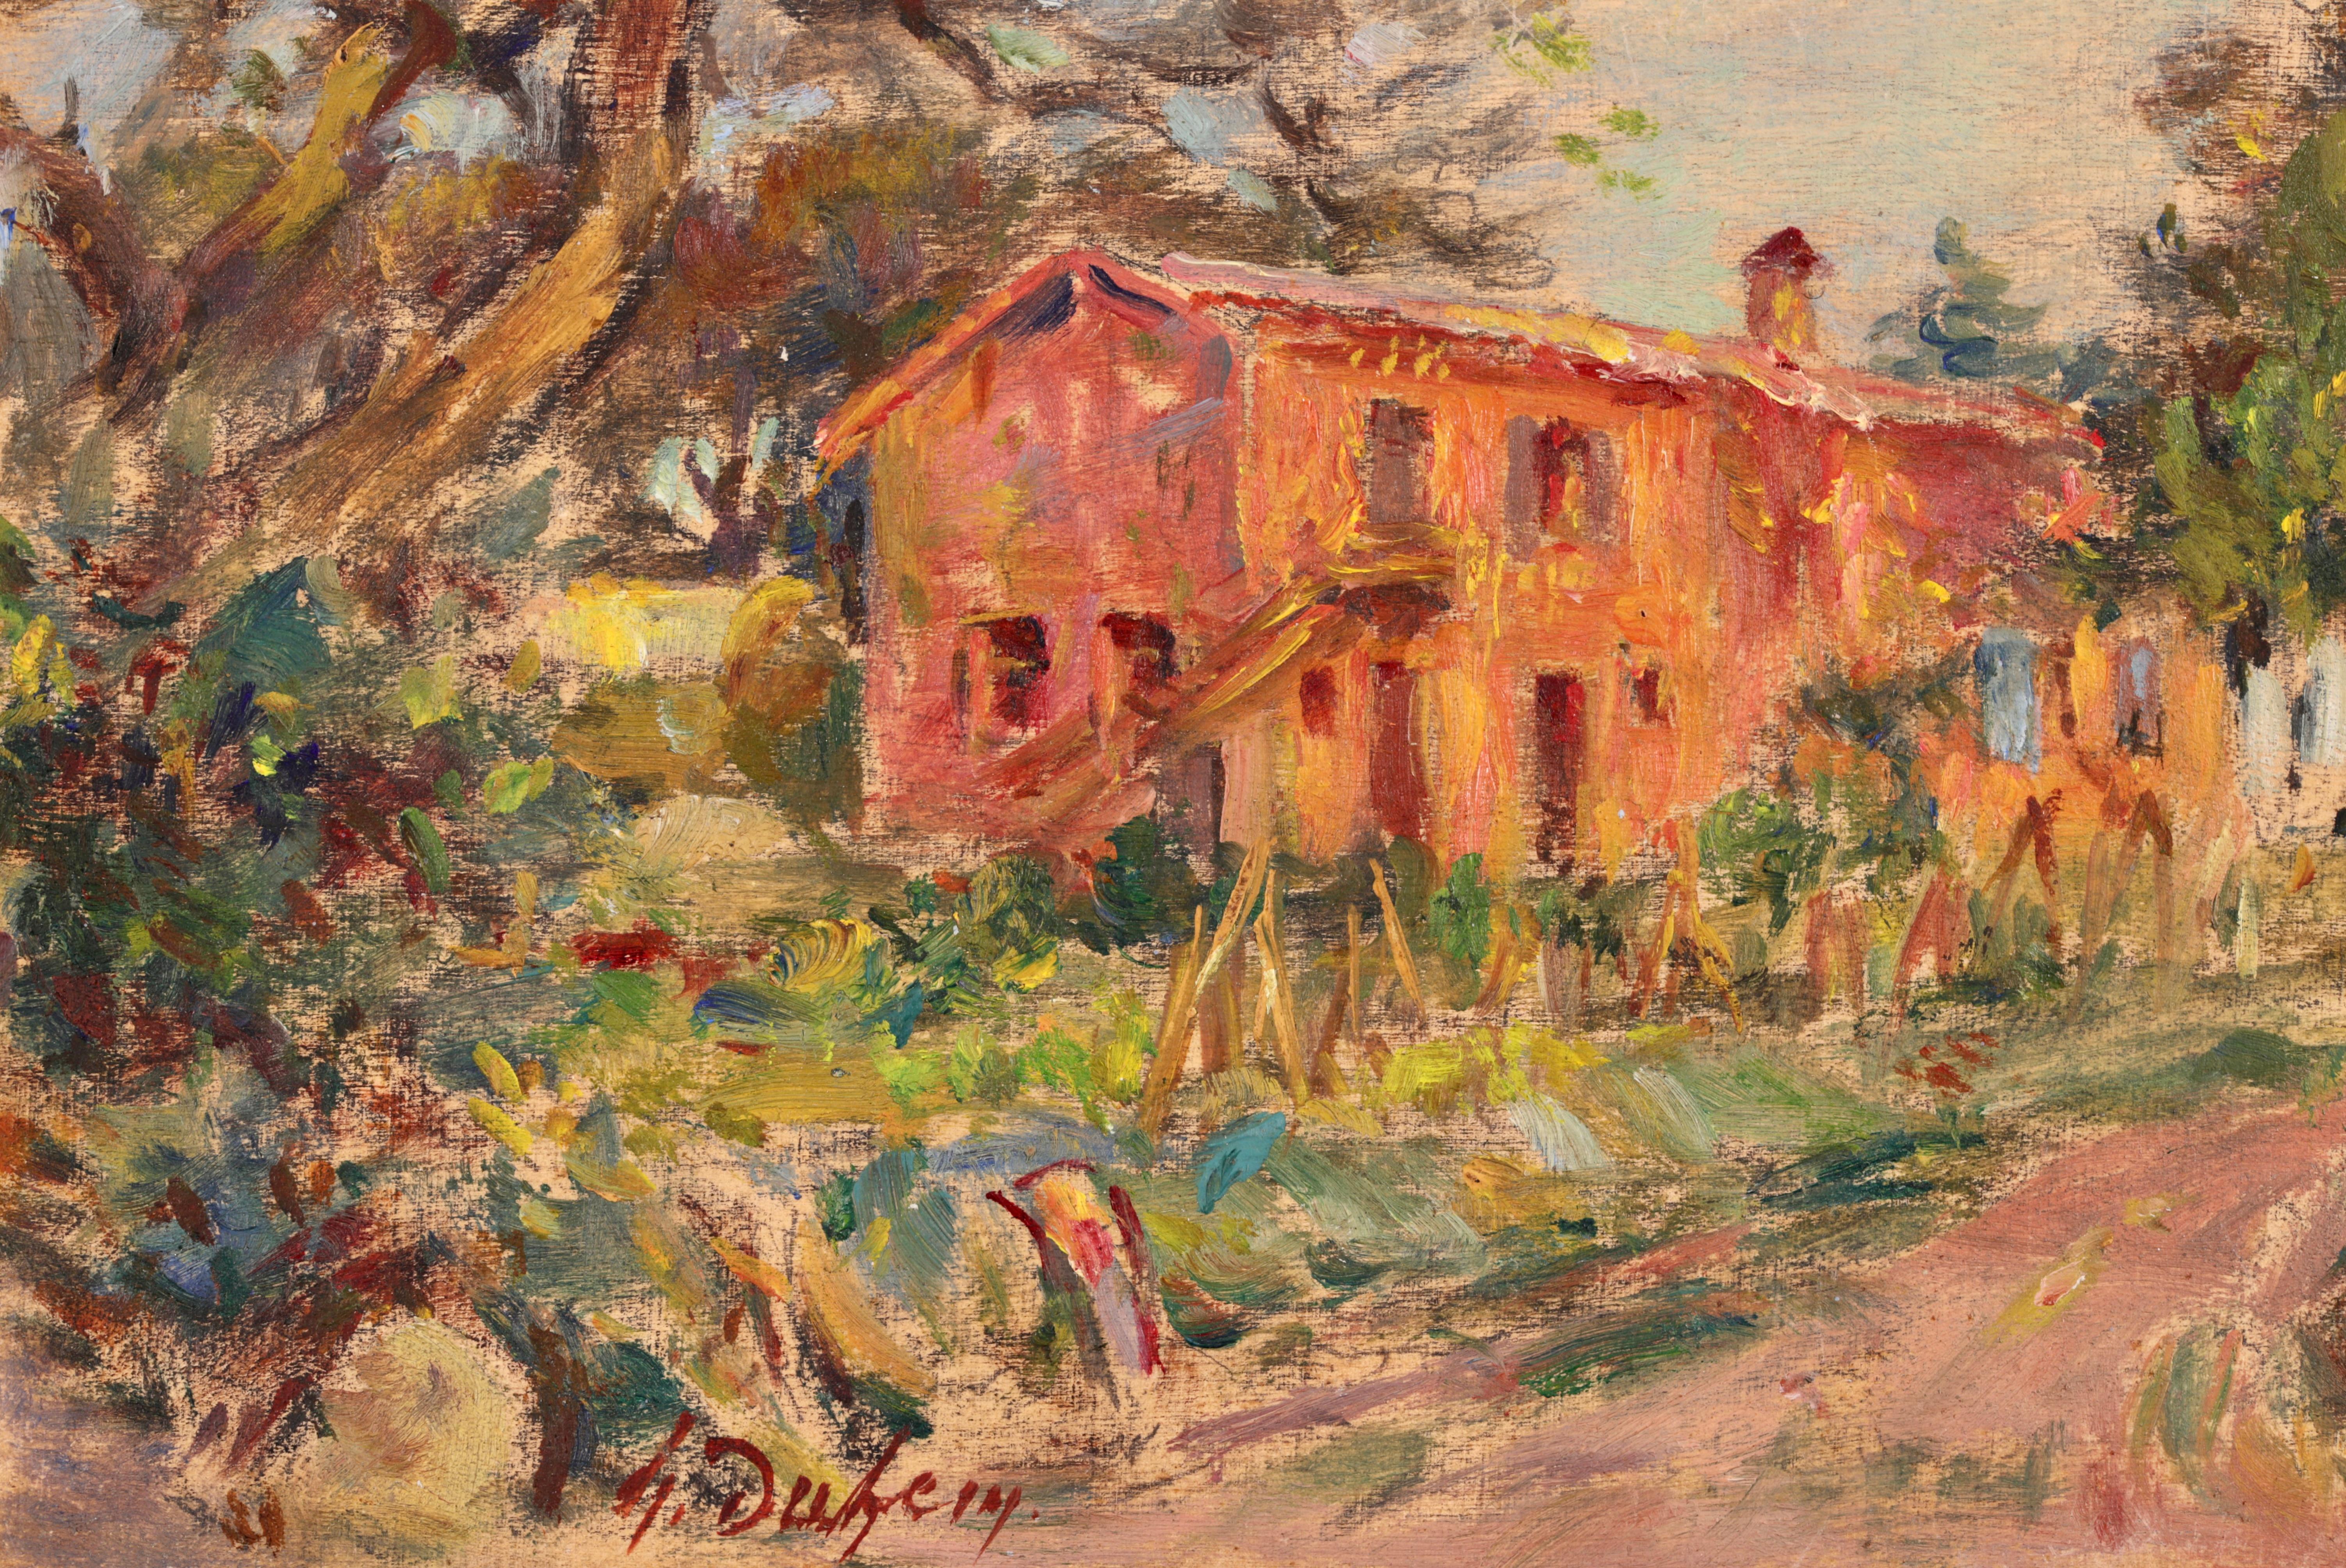 Maison dans le paysage - Impressionist Oil, House in Landscape by Henri Duhem For Sale 3